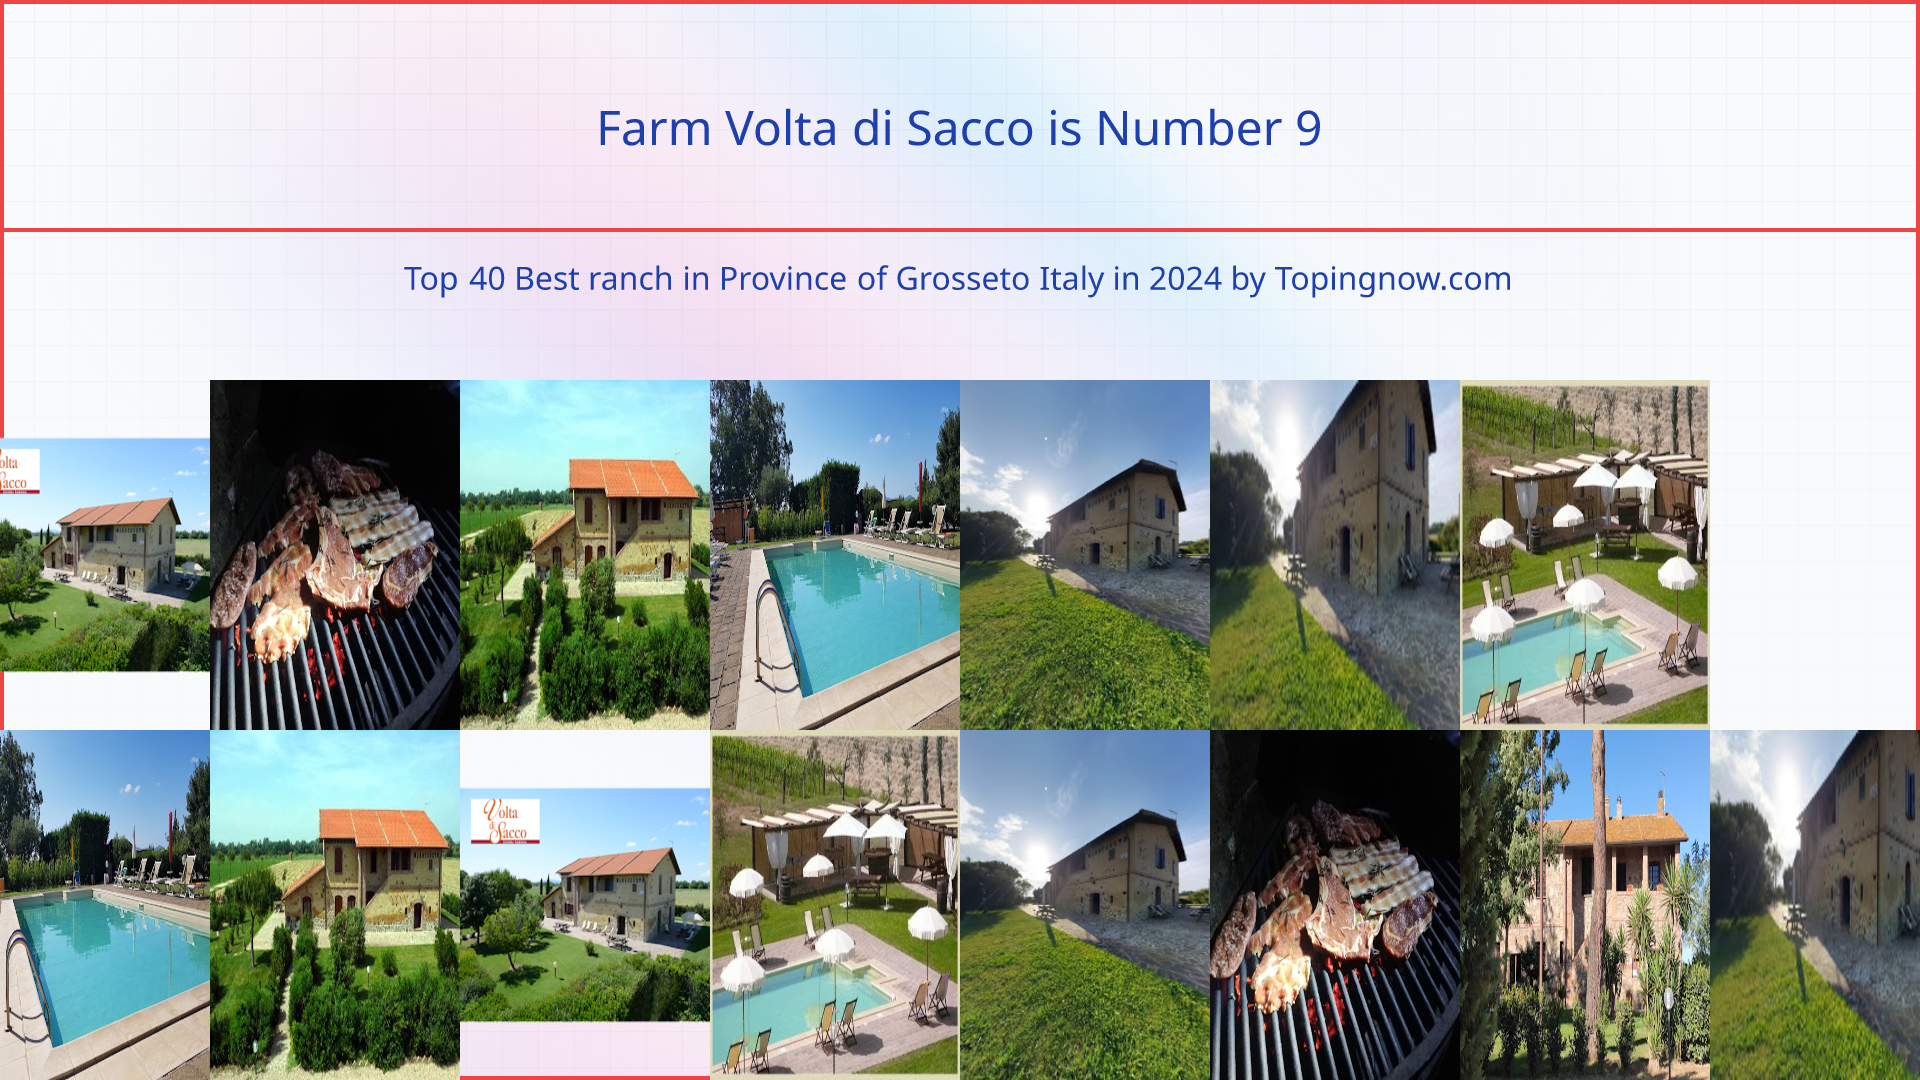 Farm Volta di Sacco: Top 40 Best ranch in Province of Grosseto Italy in 2024